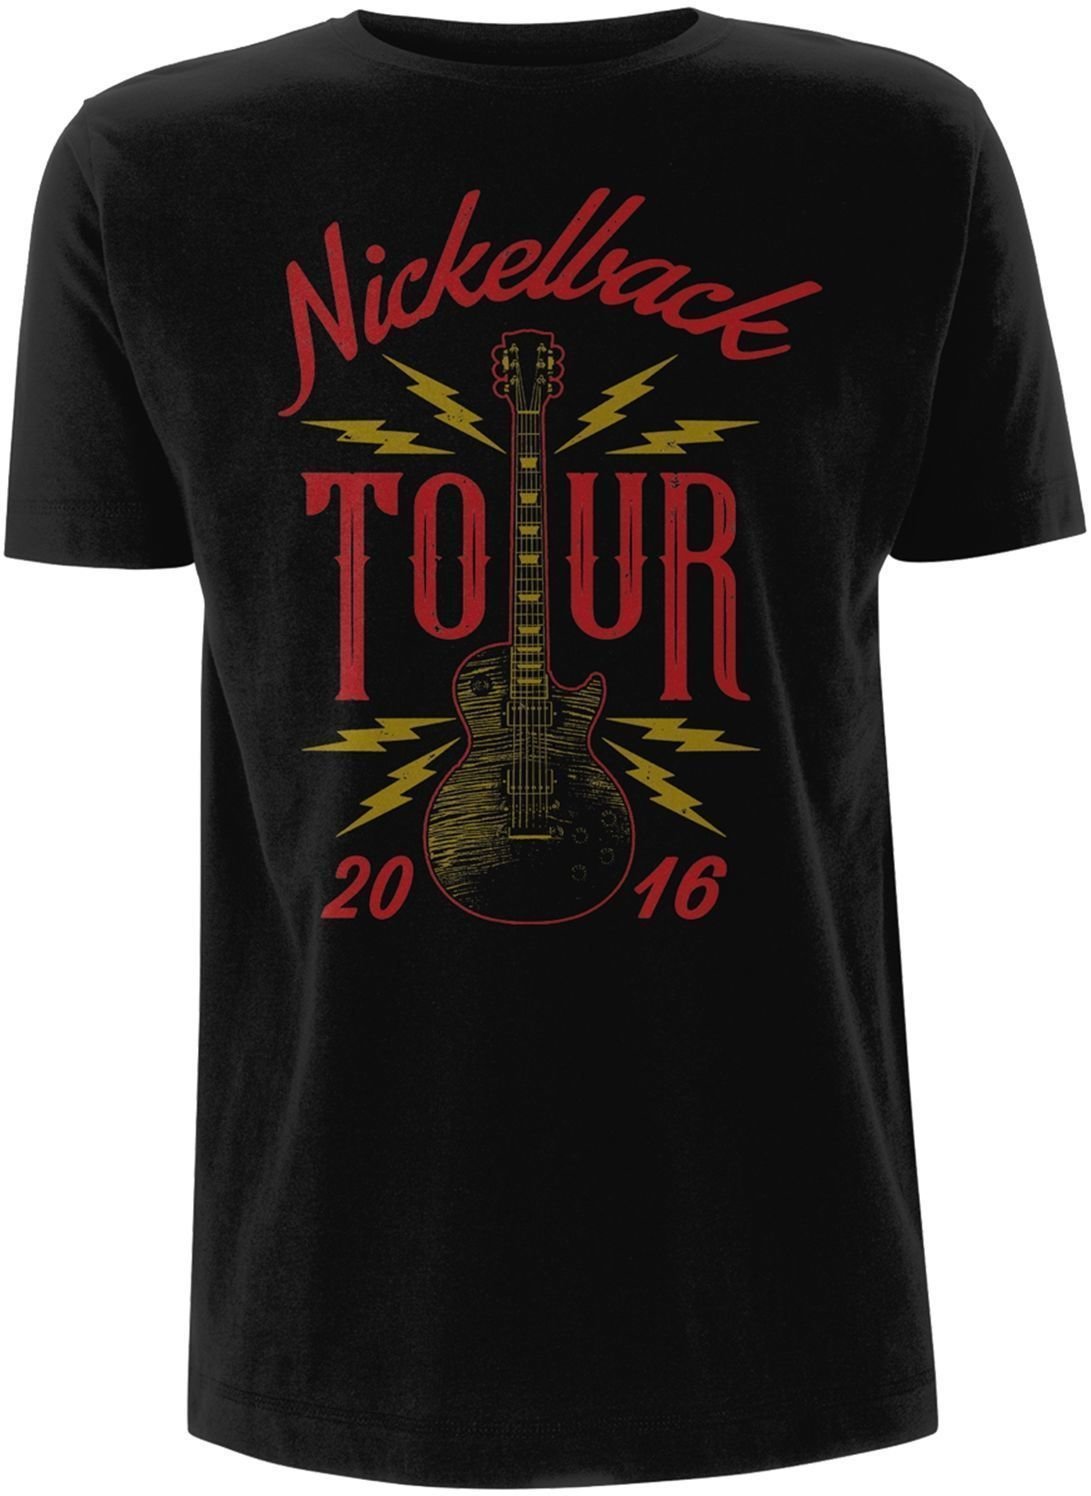 T-shirt Nickelback T-shirt Guitar Tour 2016 Masculino Black S